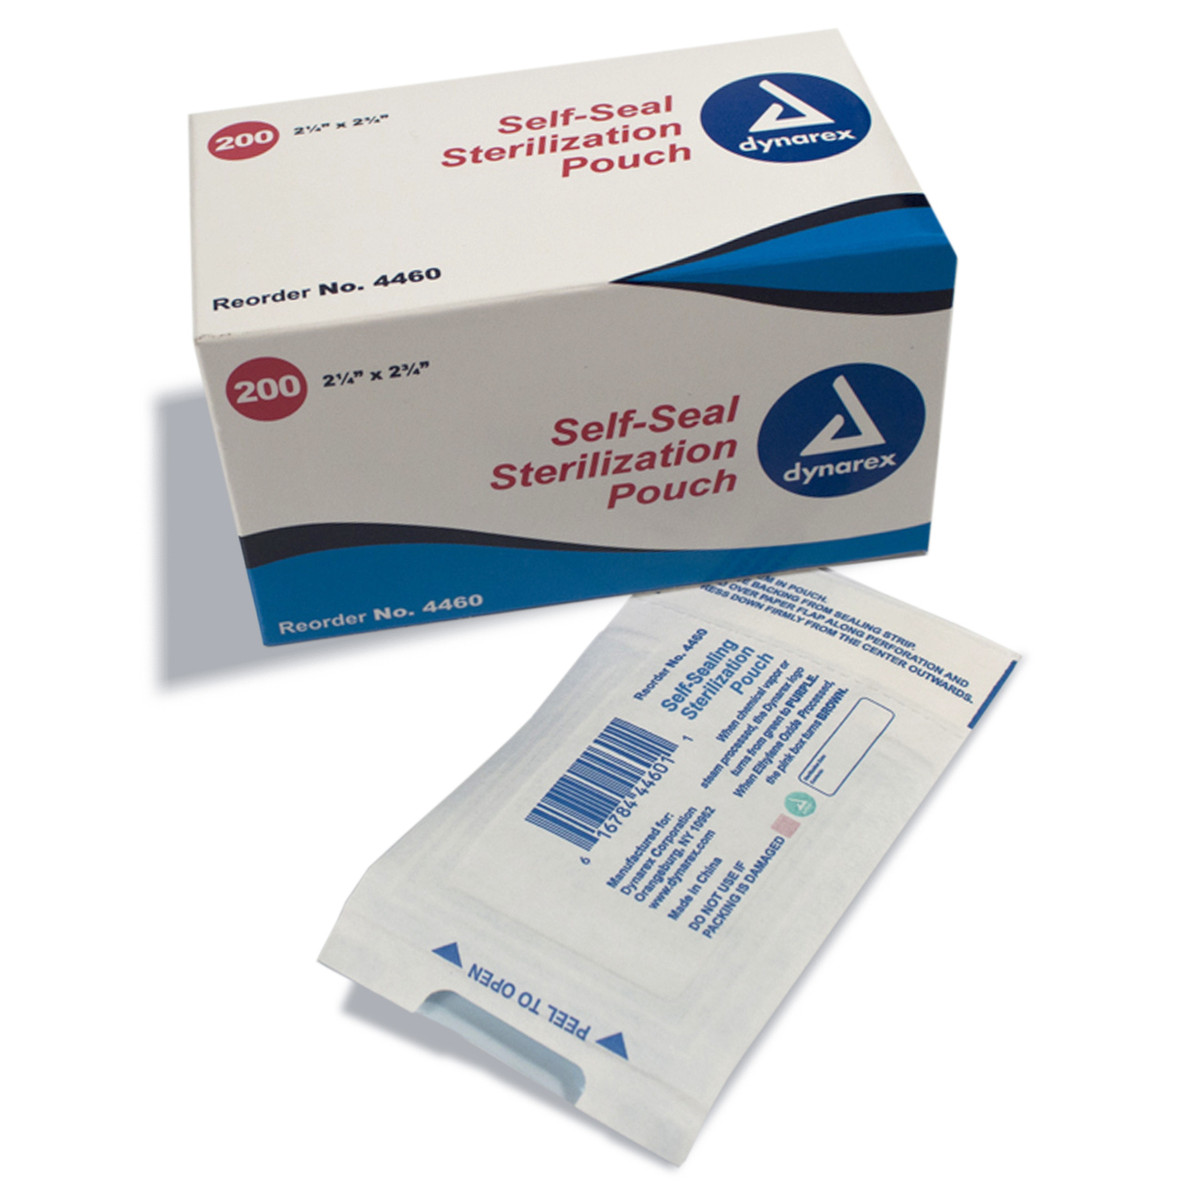 Self-Sealing Sterilization Pouches, 2 1/4 x 2 3/4, Box of 200